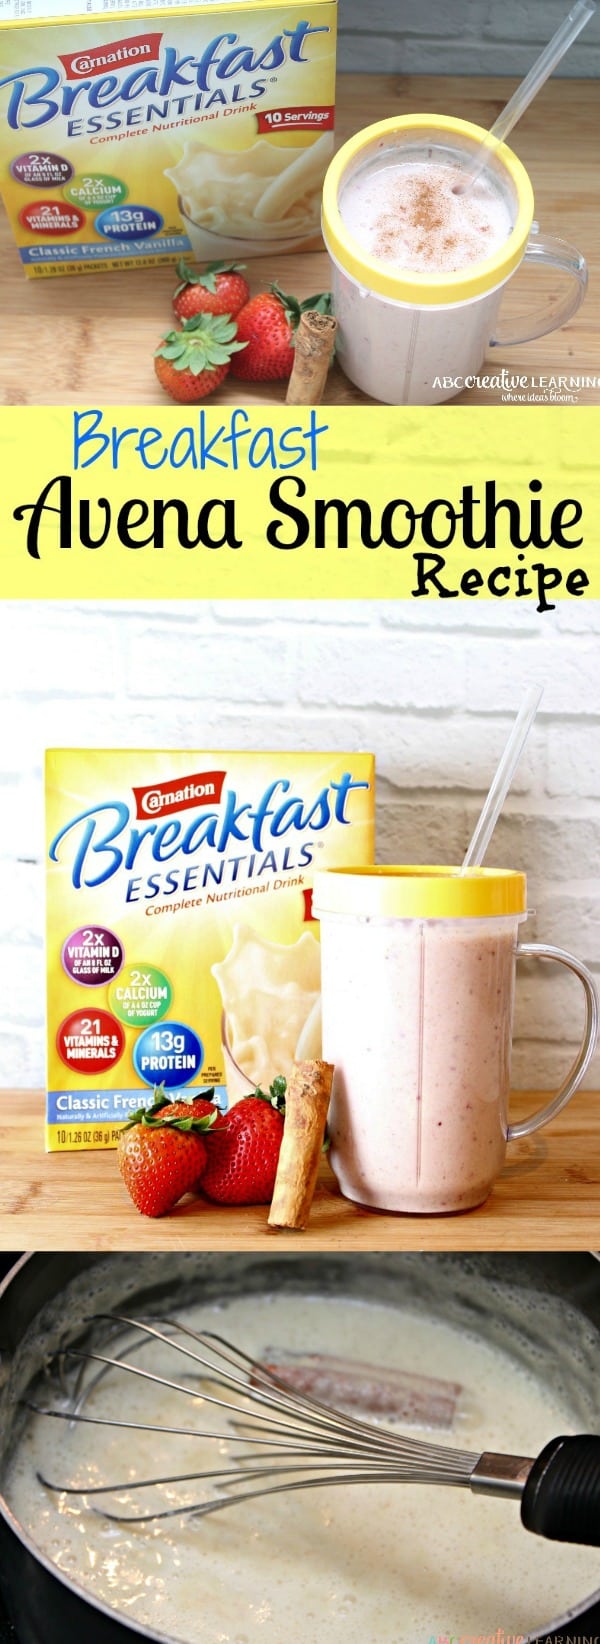 Easy and Delicious Breakfast Avena Smoothie Recipe - simplytodaylife.com